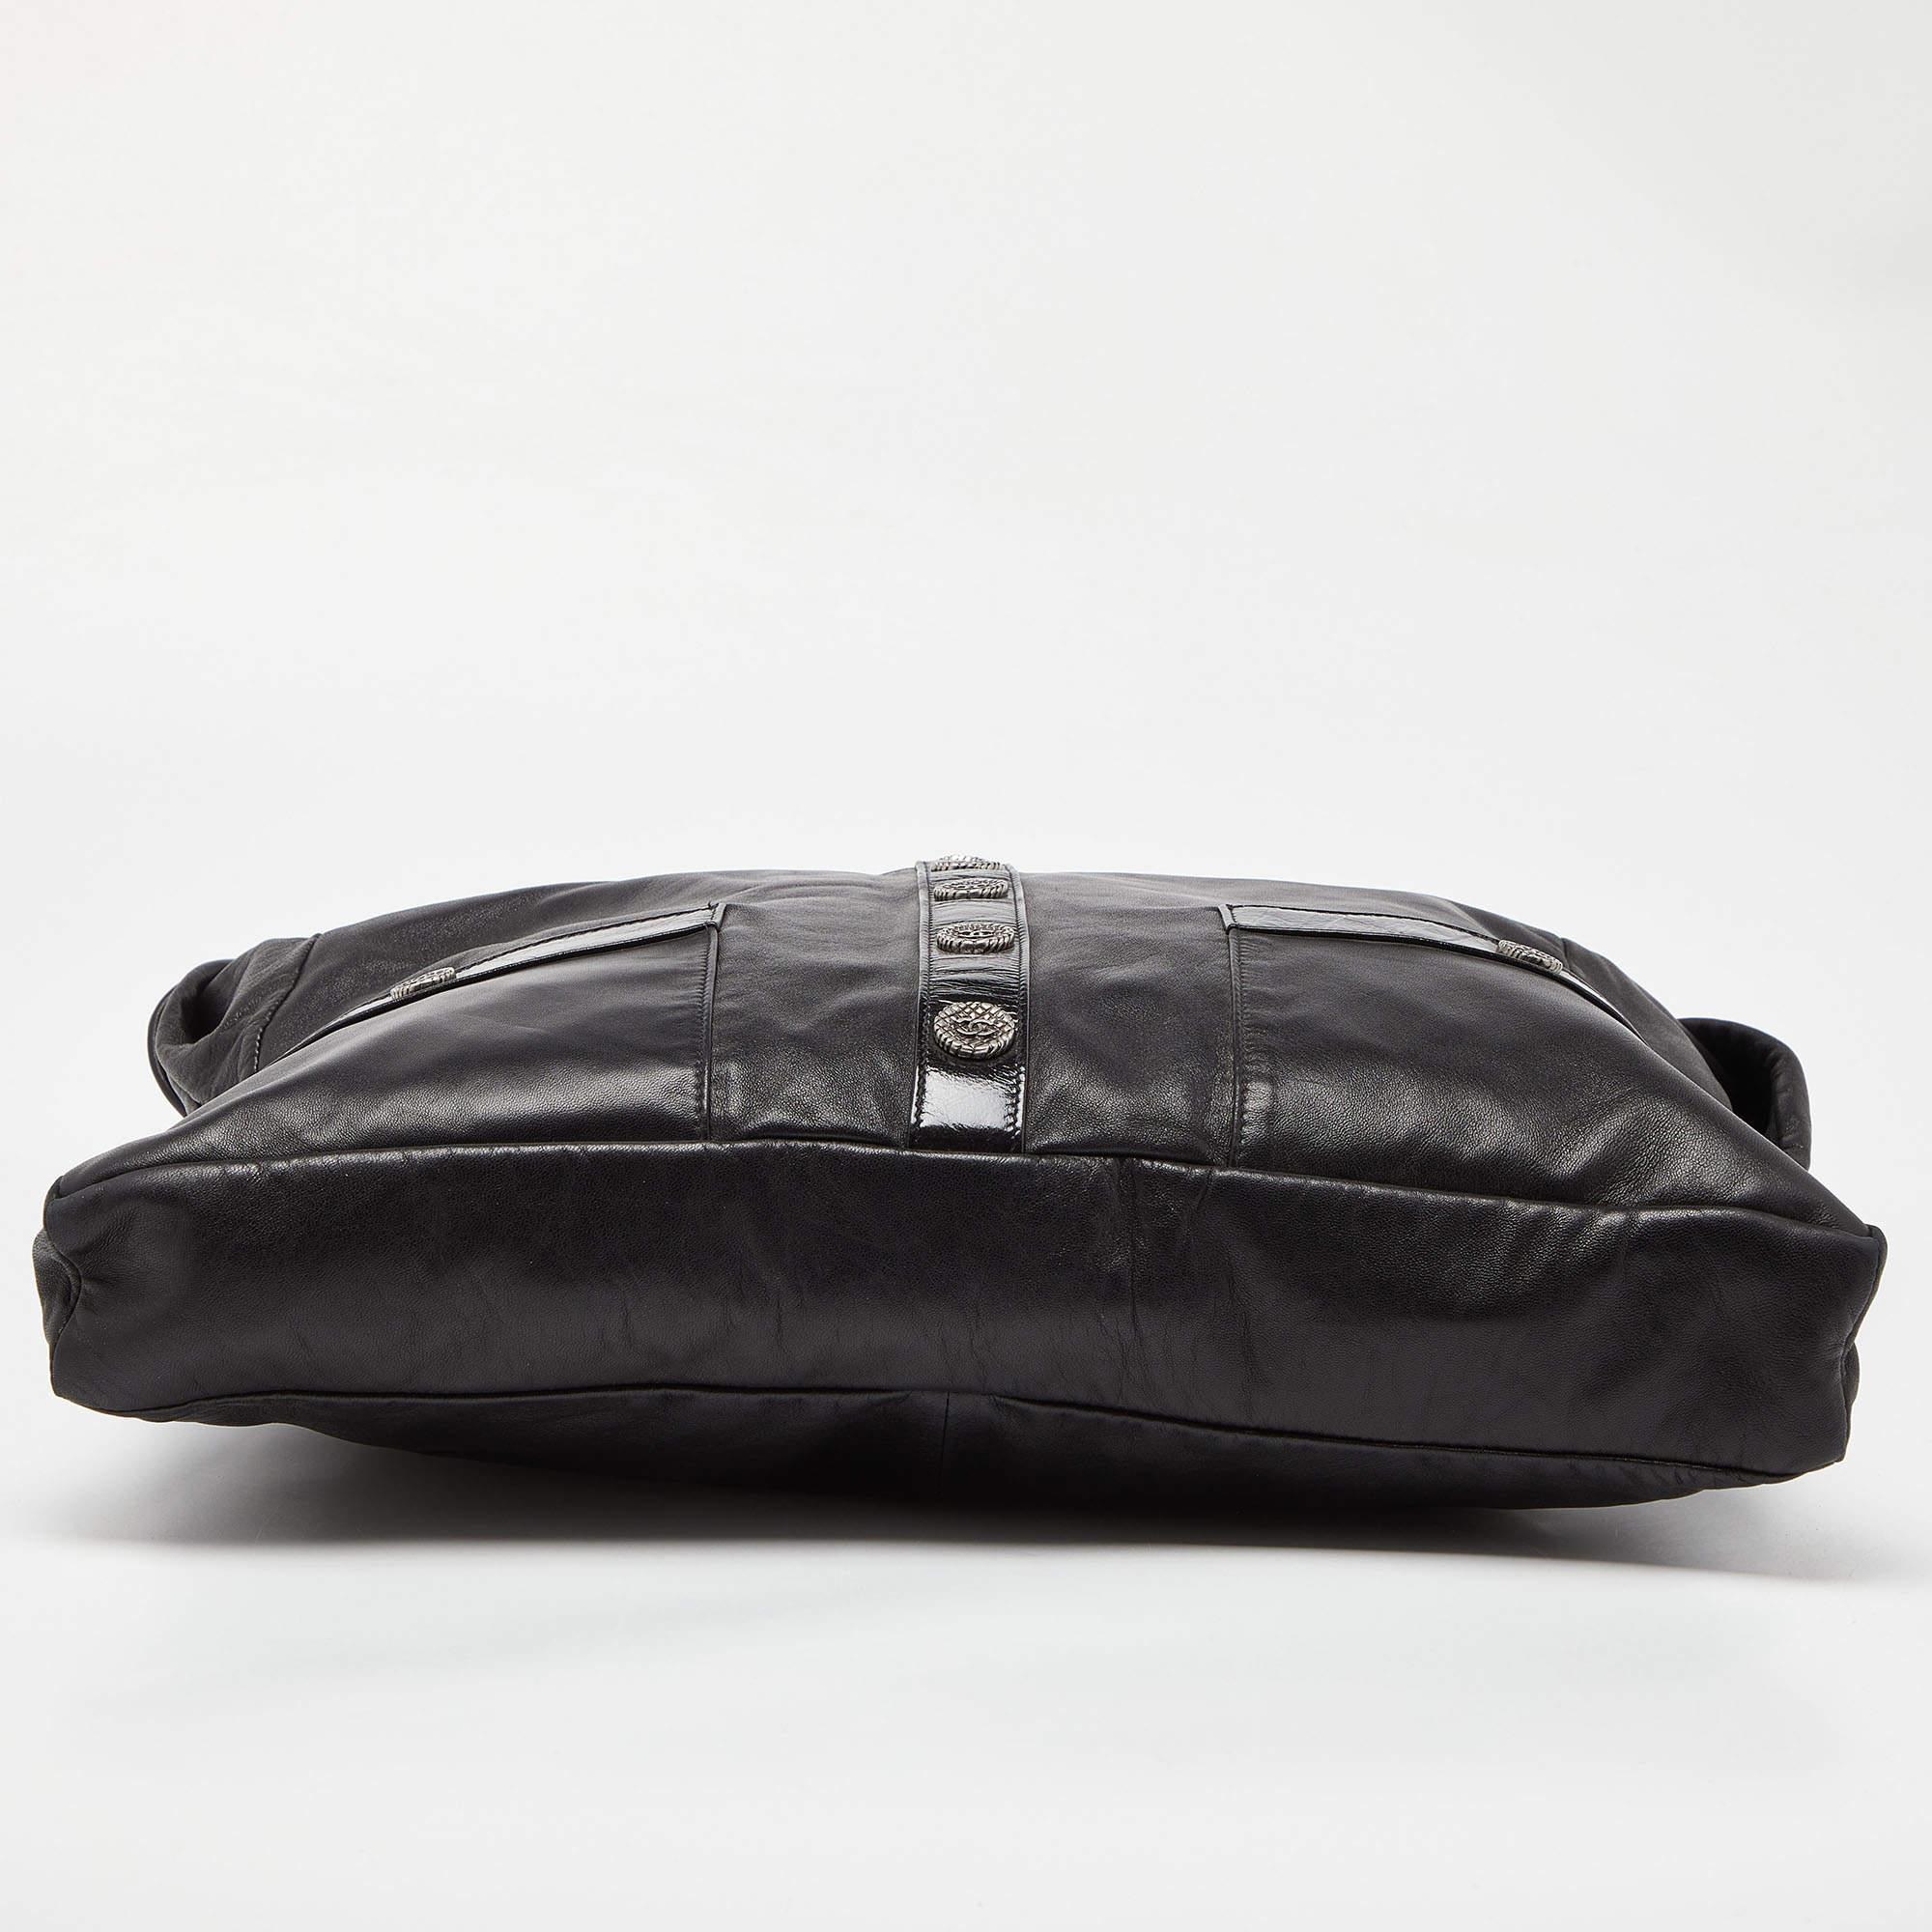 Chanel Black Leather Large Girl Chanel Bag For Sale 1